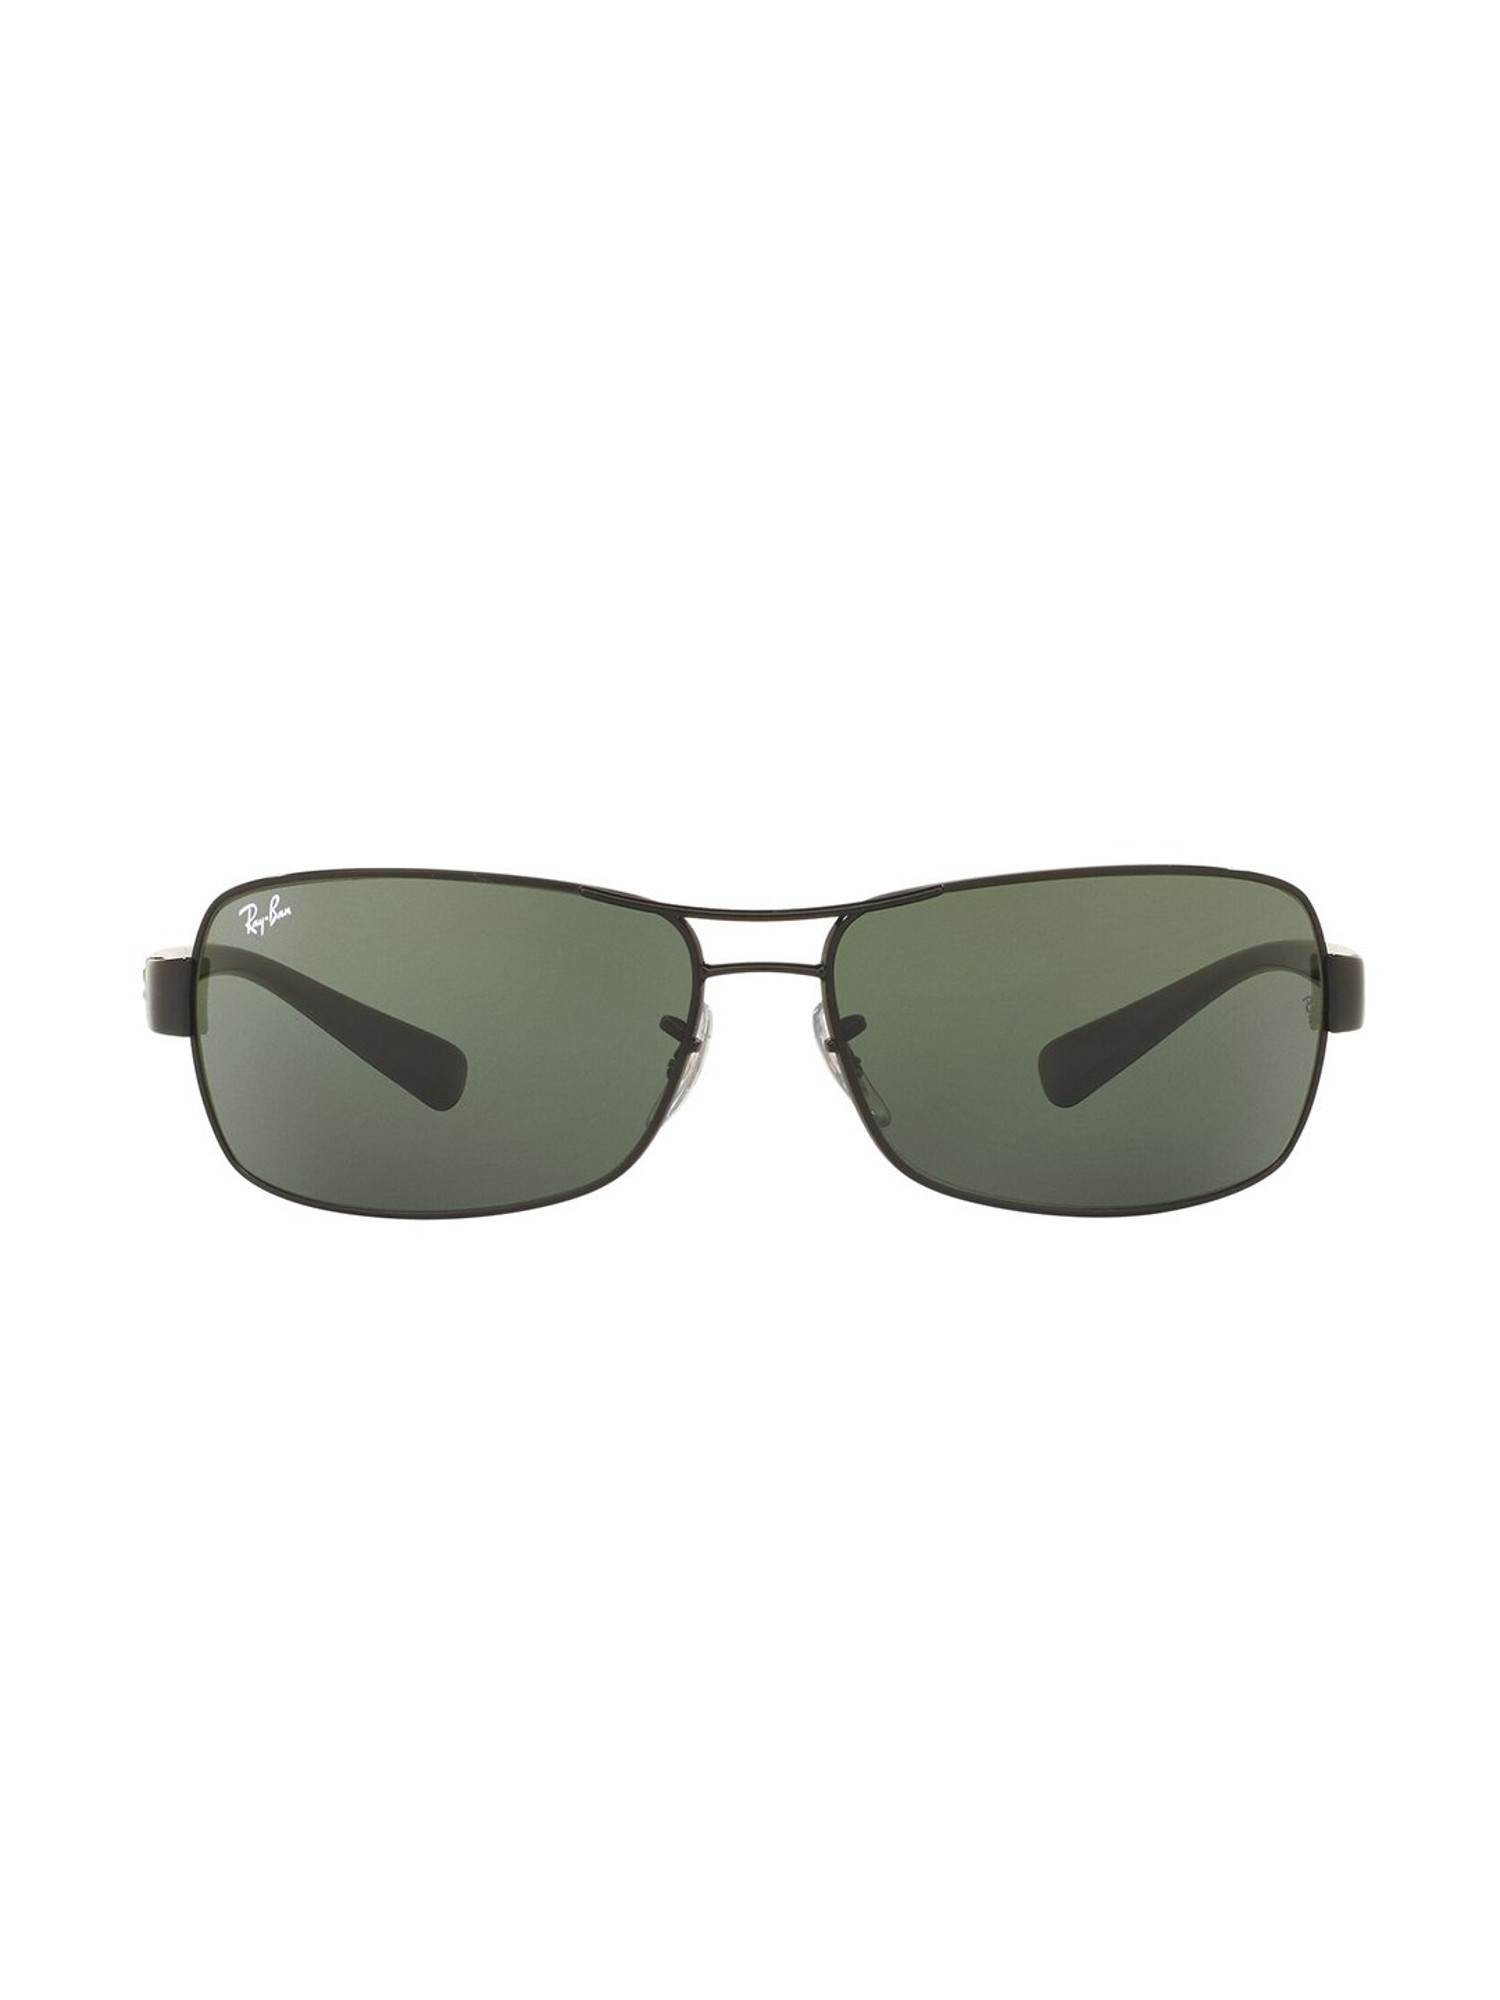 Rush: (50% off price) Ray-Ban Chromance RB8319CH/9075/J0 Polarized |  Sunglasses, Men's Fashion, Watches & Accessories, Sunglasses & Eyewear on  Carousell